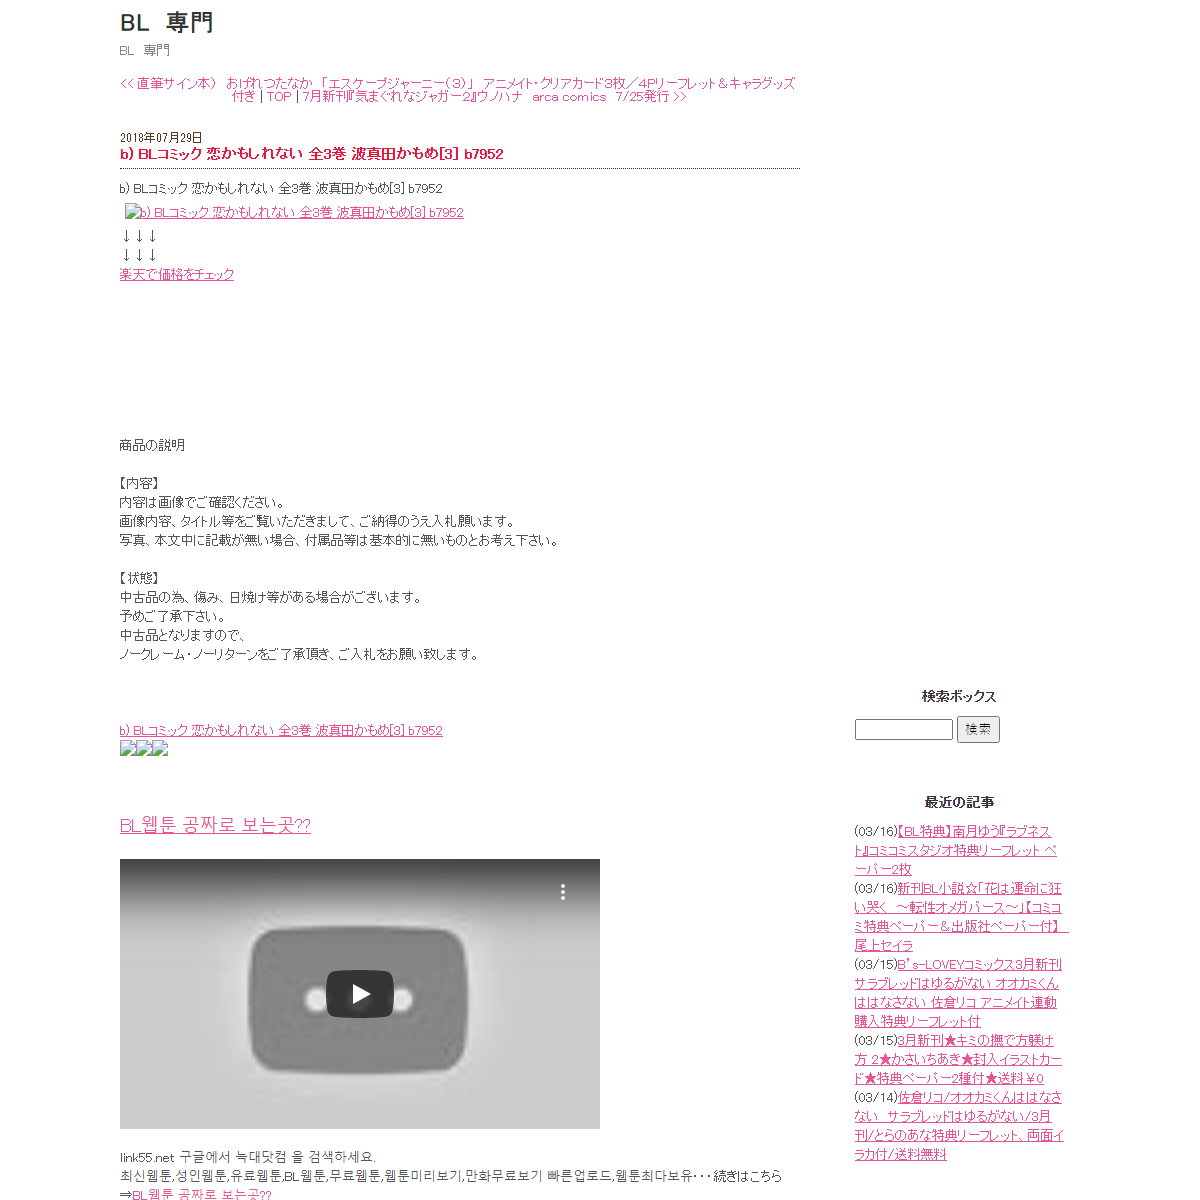 A complete backup of http://boyslovee.sblo.jp/article/184045422.html